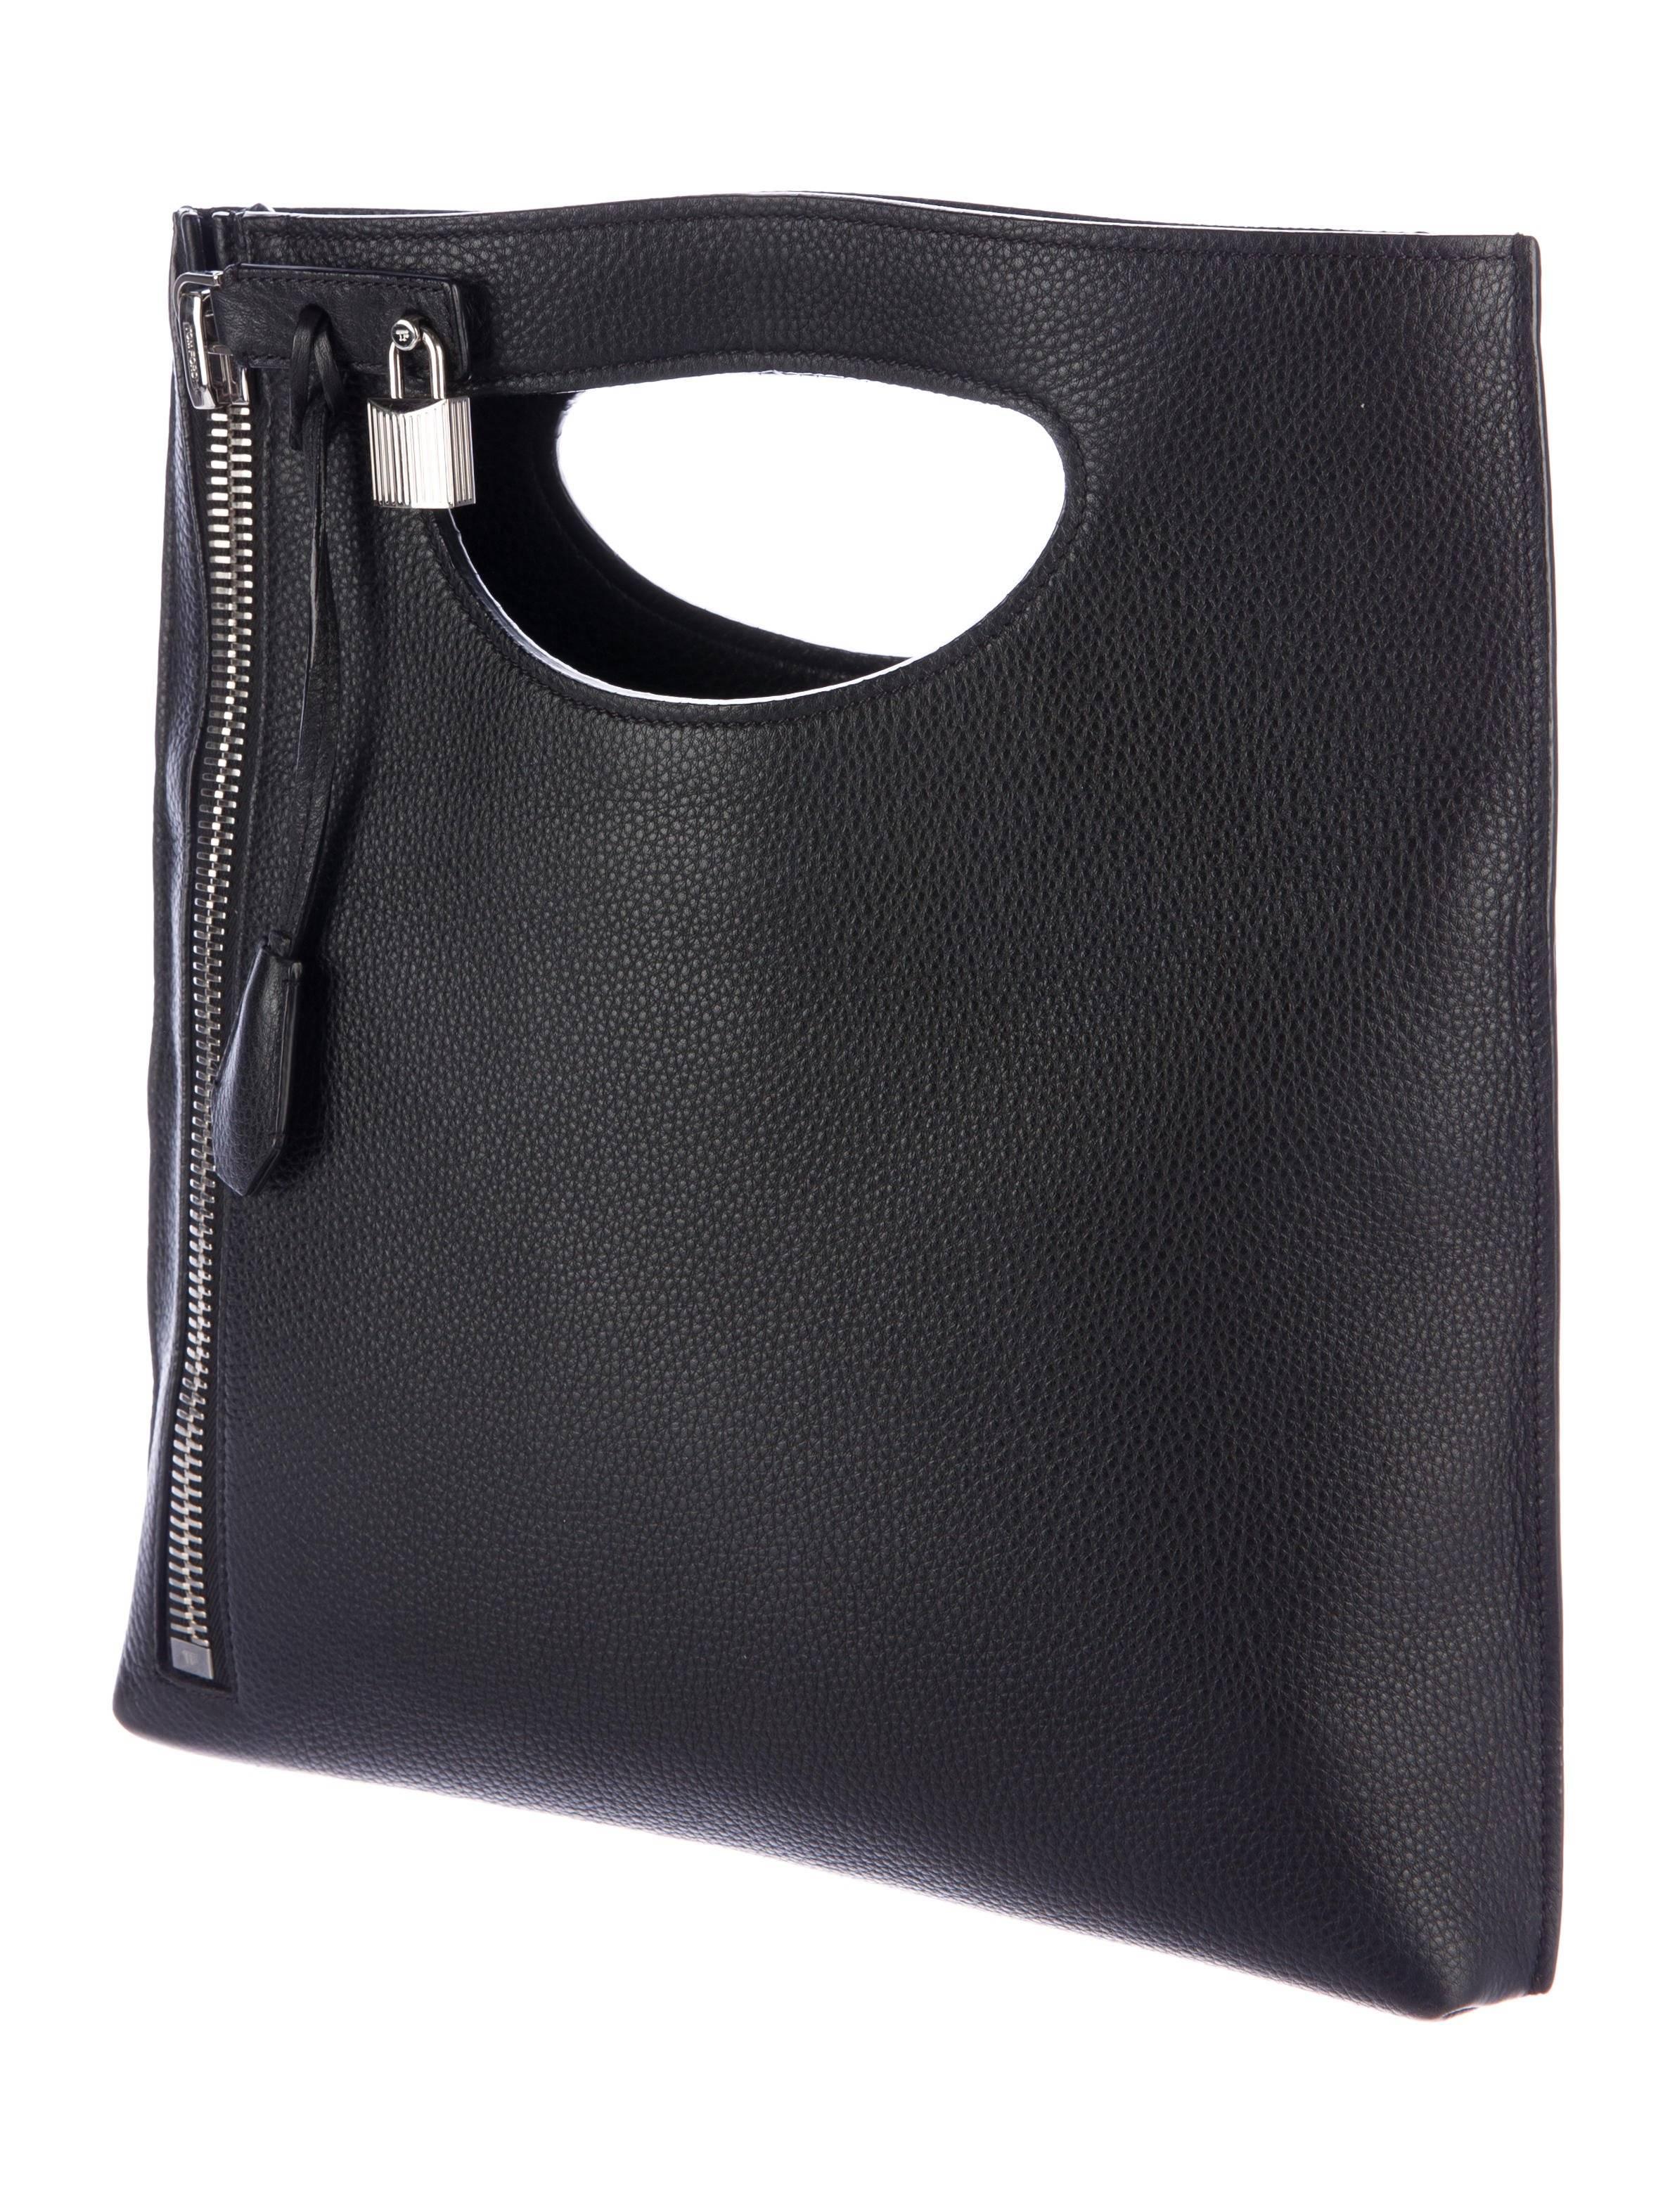 Women's Tom Ford Black Leather Silver Lock 2 in 1 Evening Clutch Crossbody Shoulder Bag